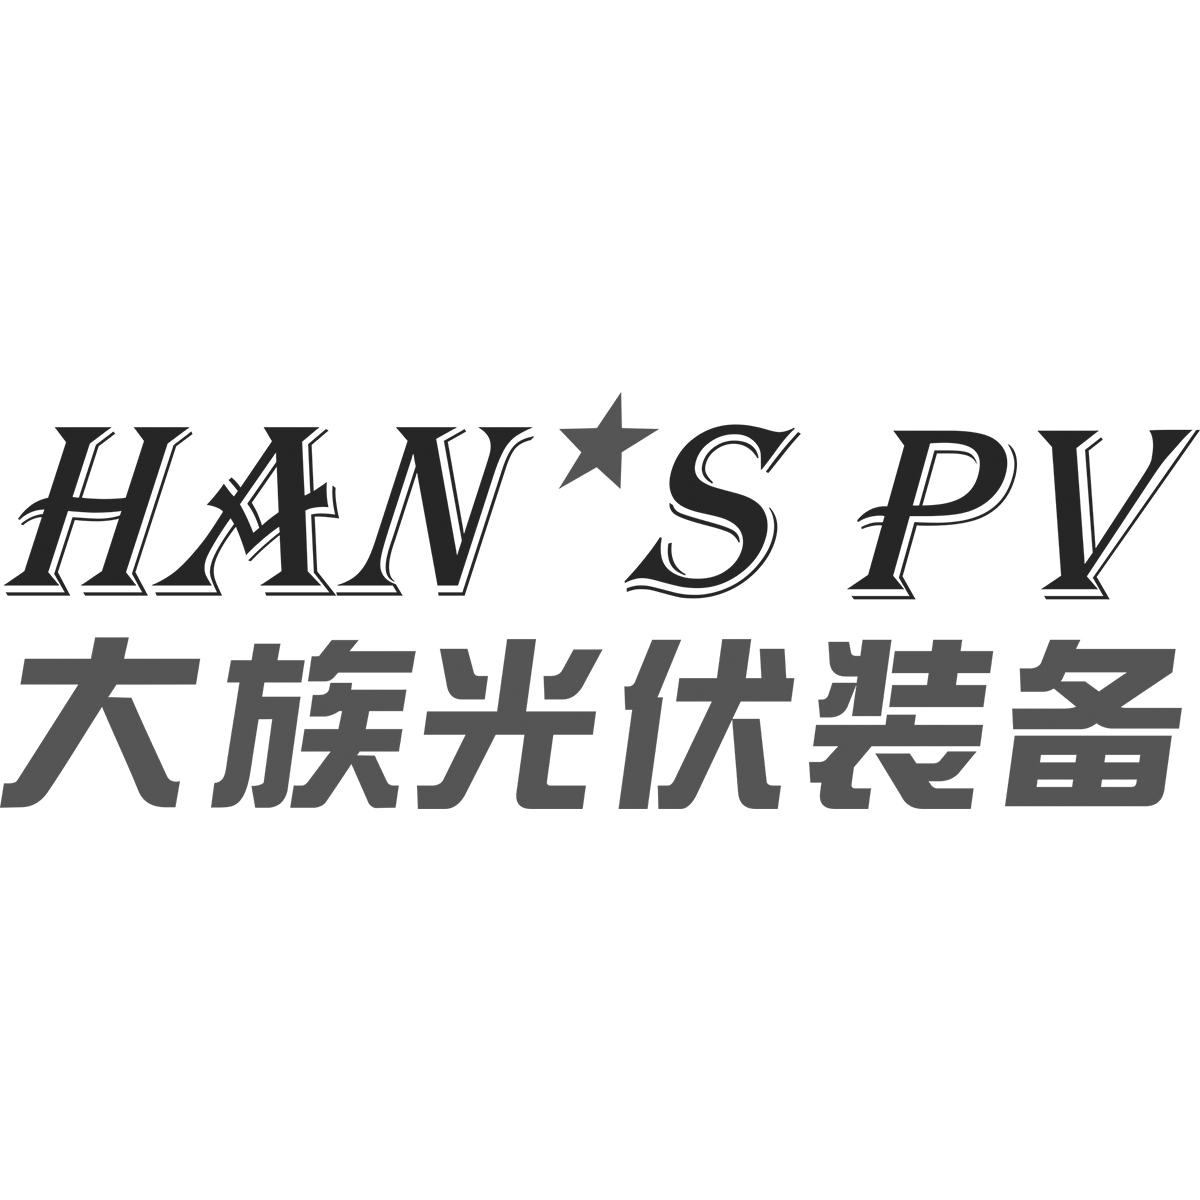 hanspv商标注册号 58065611,商标申请人大族激光科技产业集团股份有限